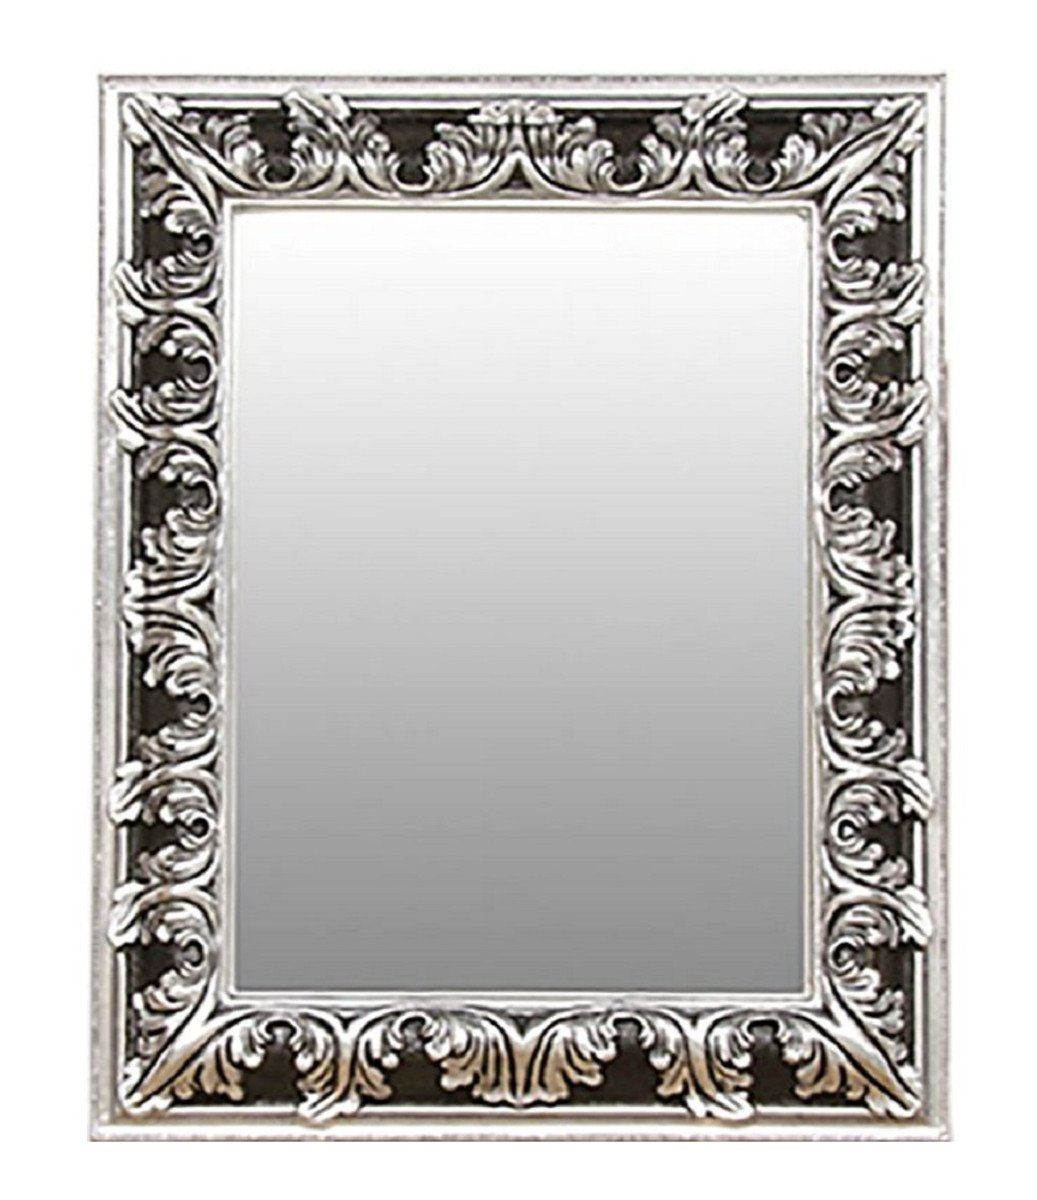 H. Silber cm Antik Möbel Barockspiegel Casa x Padrino im Barock 124 Spiegel 157 - Stil